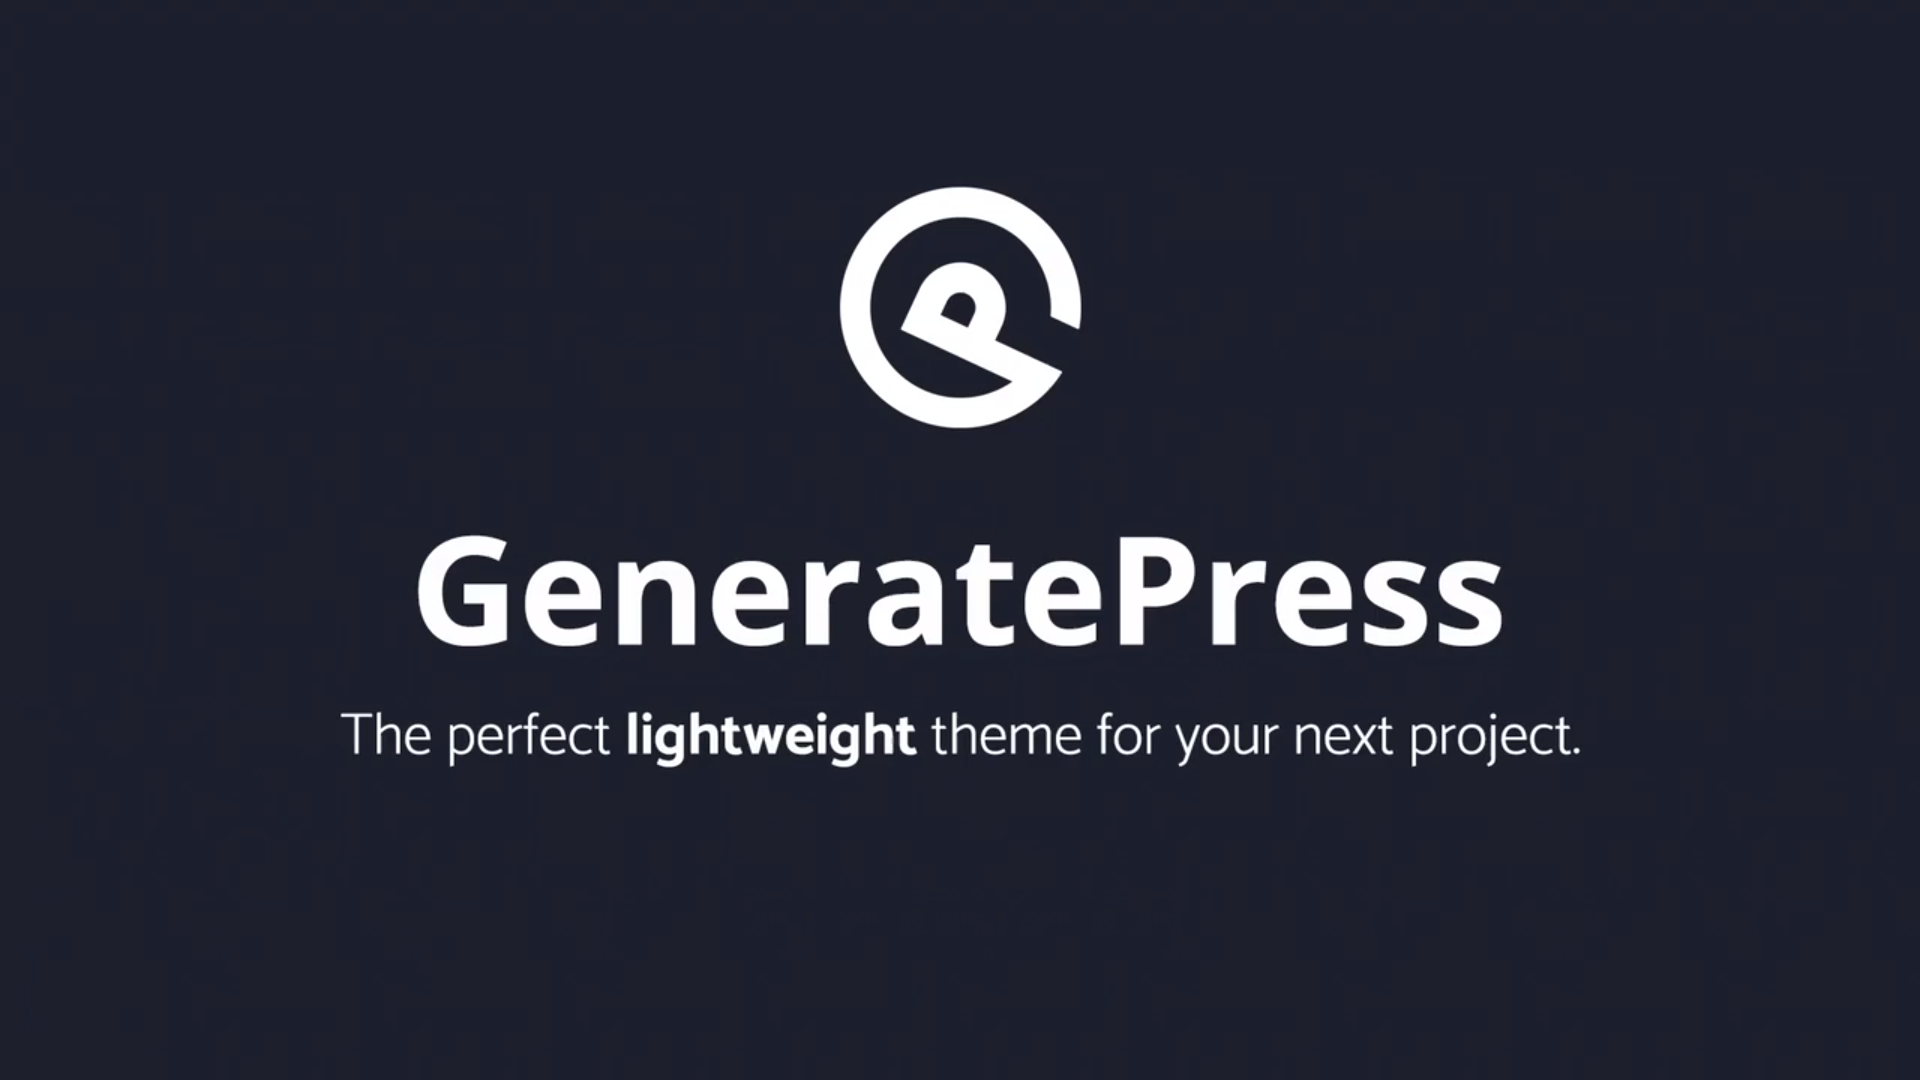 GeneratePress Premium WordPress Plugin and Theme